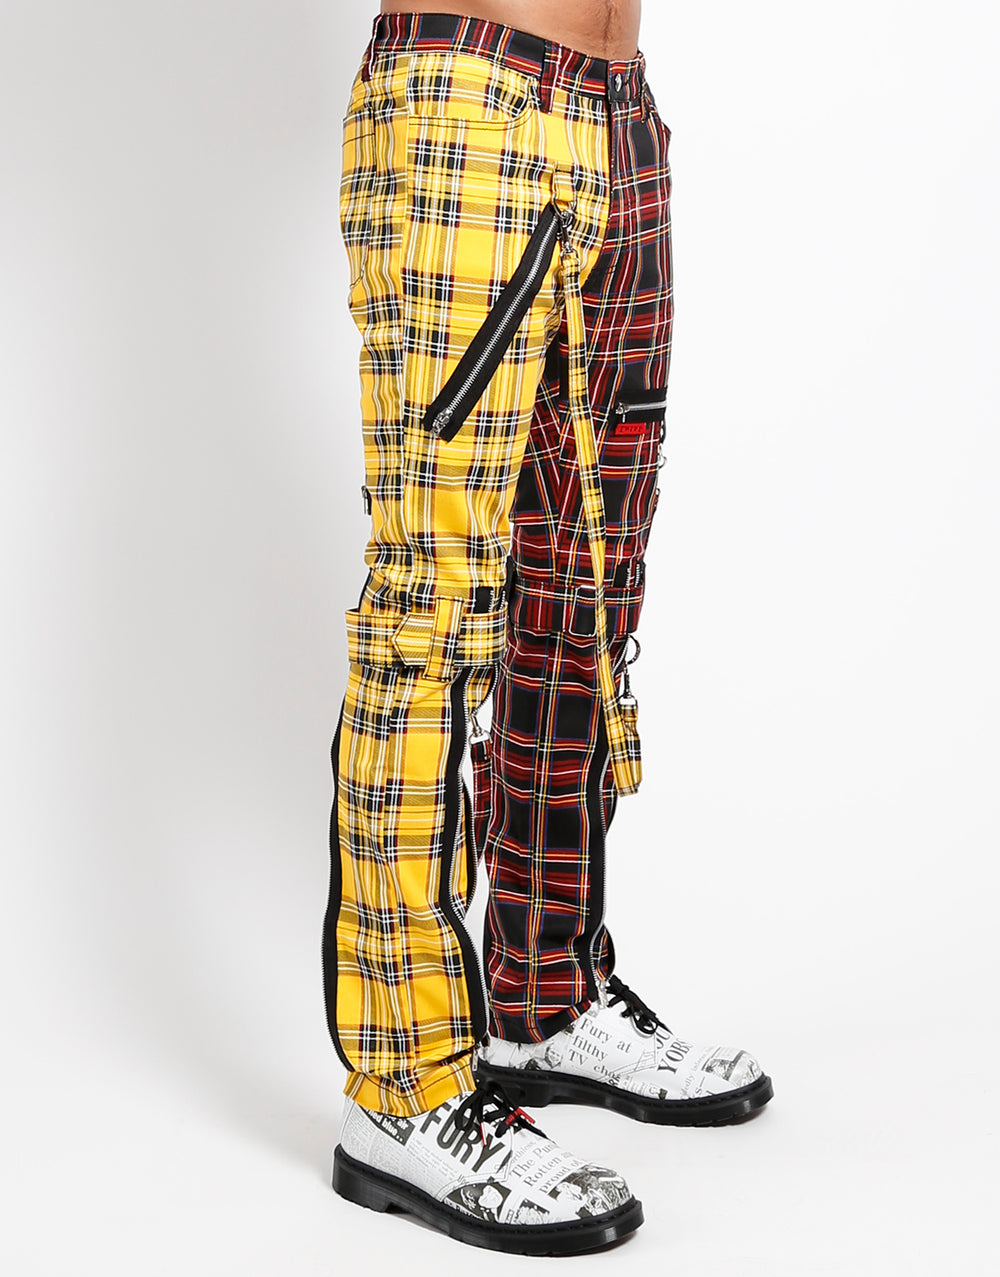 Yellow Plaid Pants With Detachable Chain